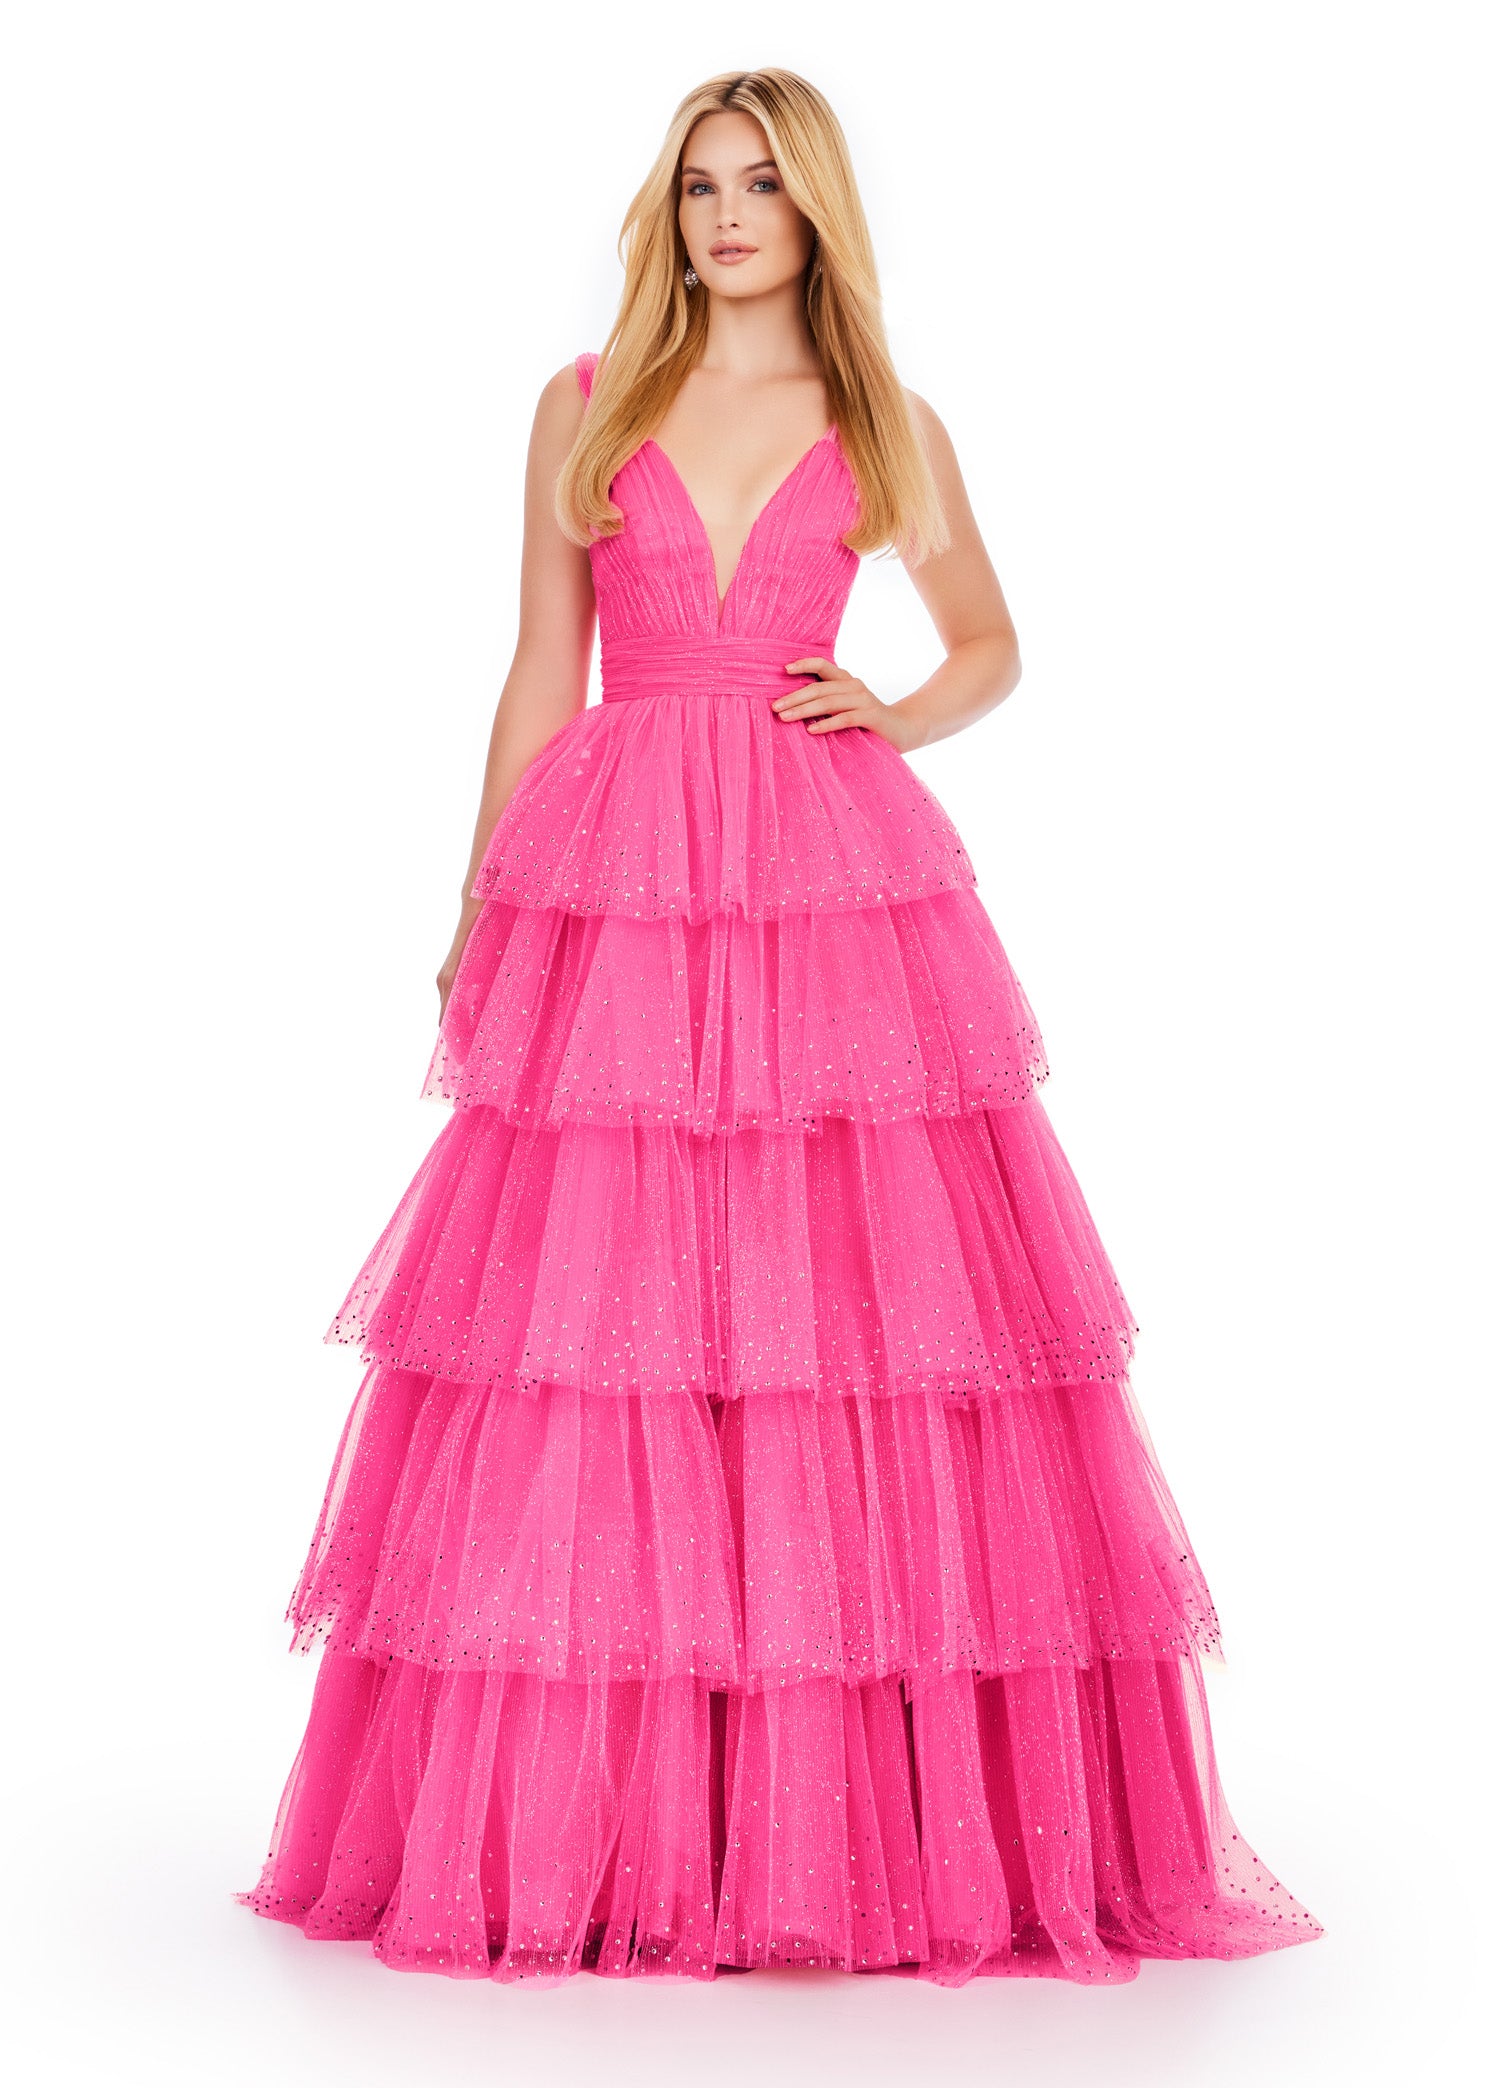 Ashley Lauren 11690 Size 4,6,8,10 Hot Pink Sheer Crystal Corset